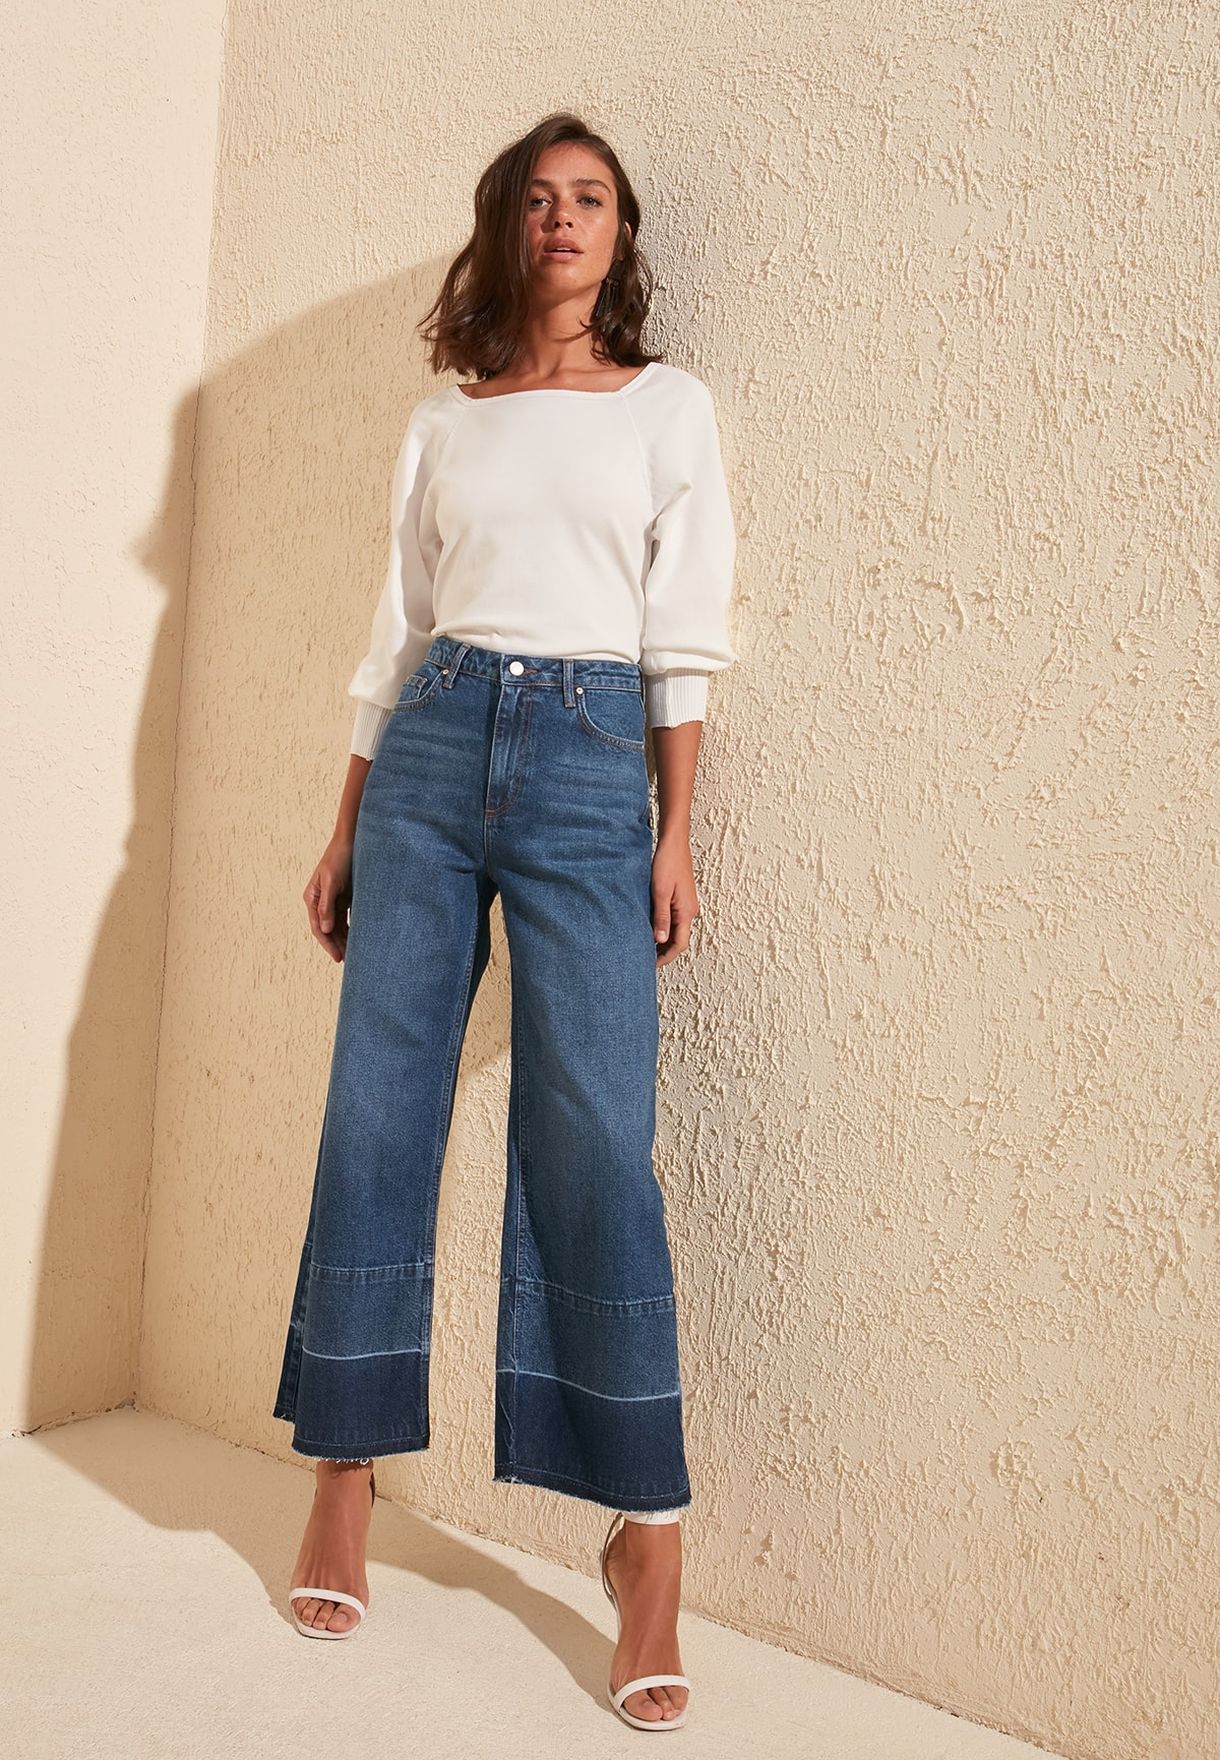 jeans culottes high waist